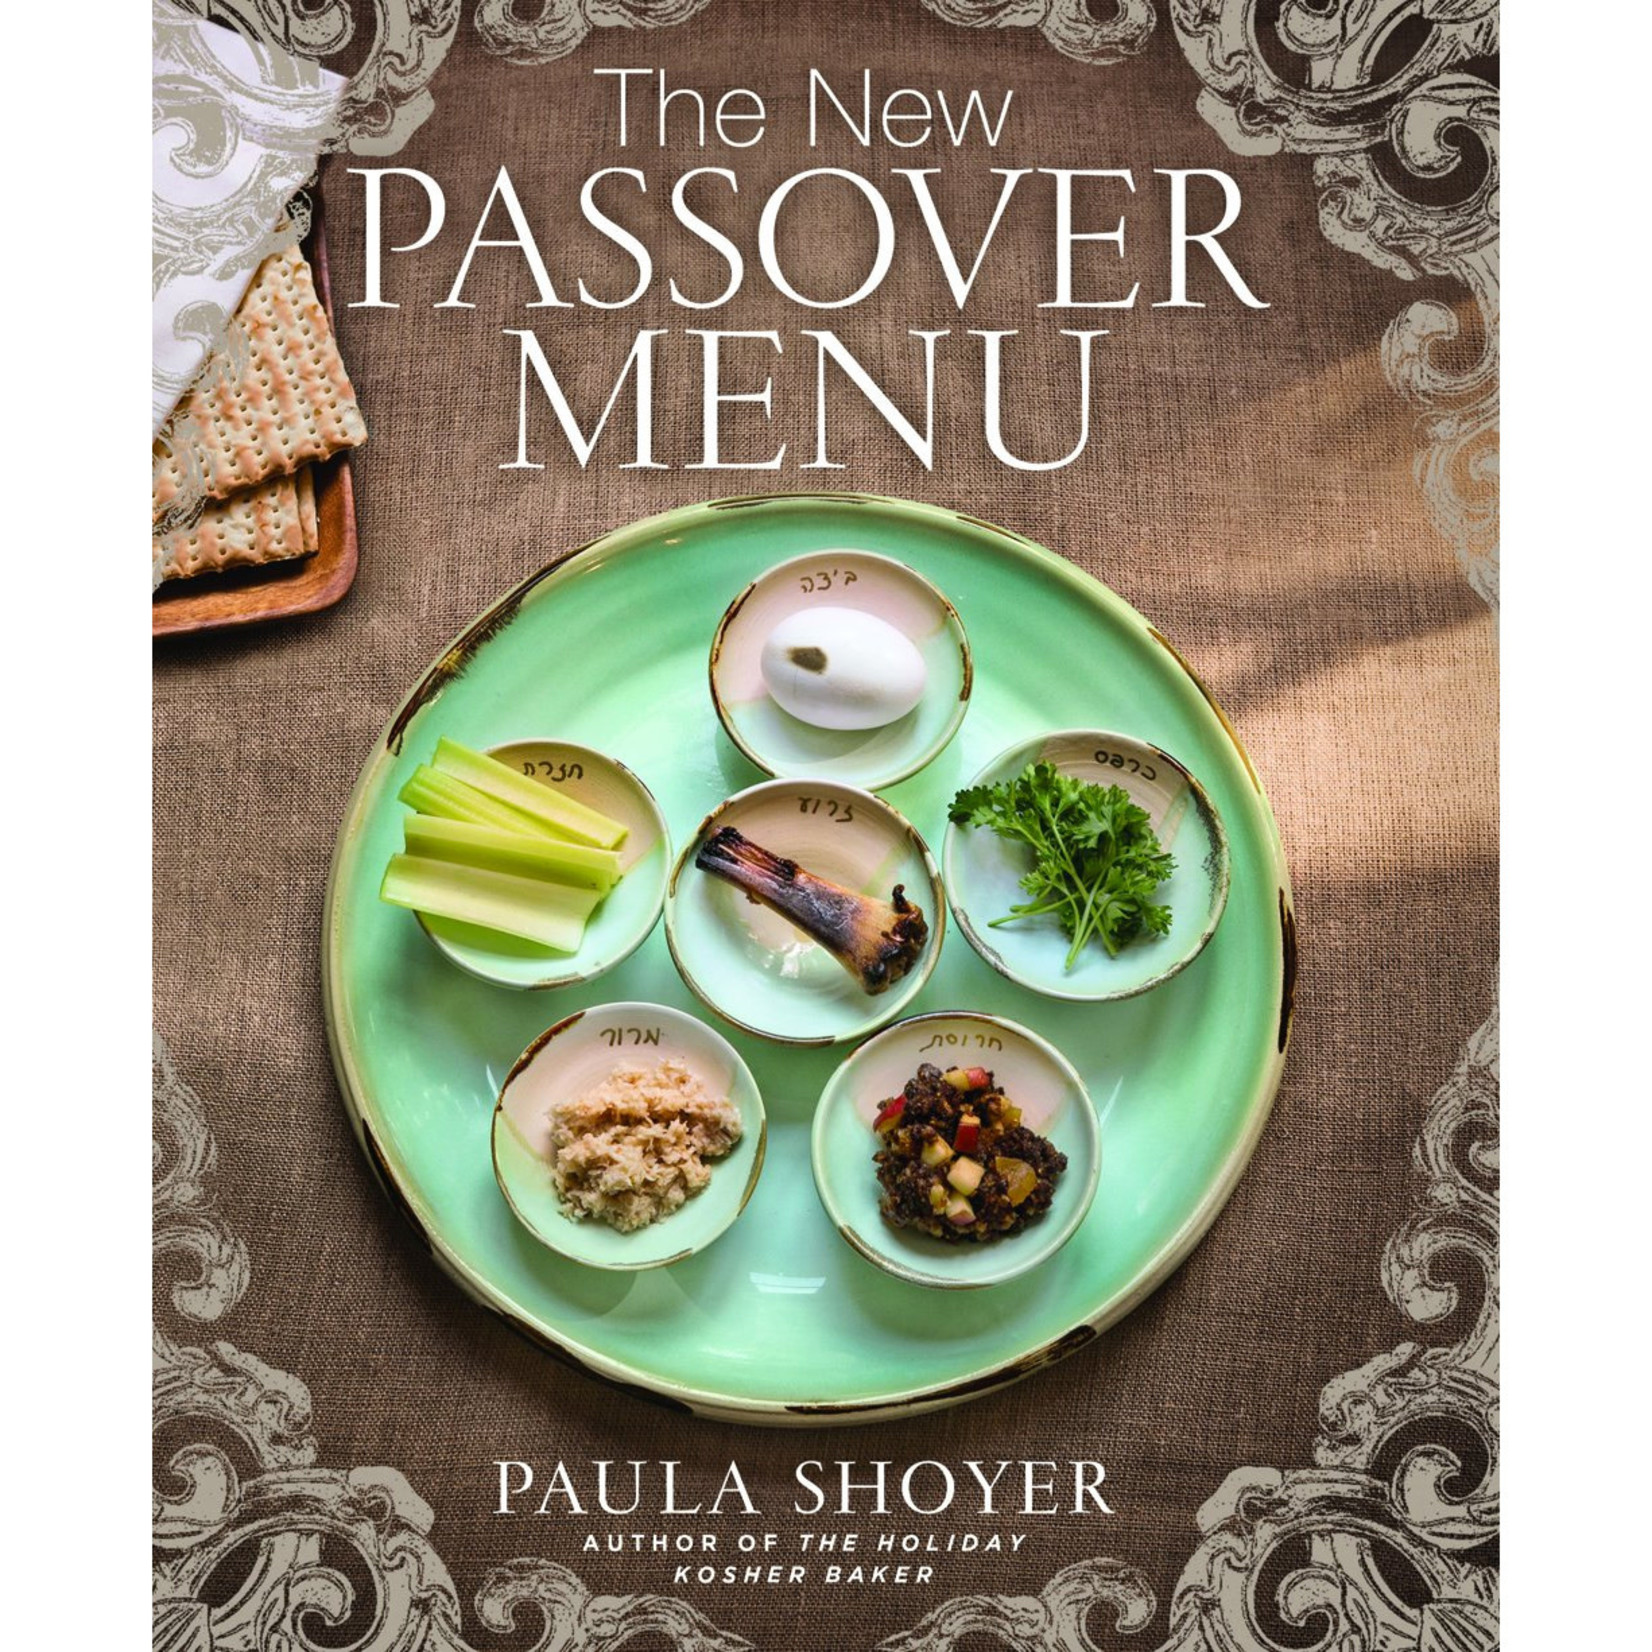 Paula Shoyer New Passover Menu, The